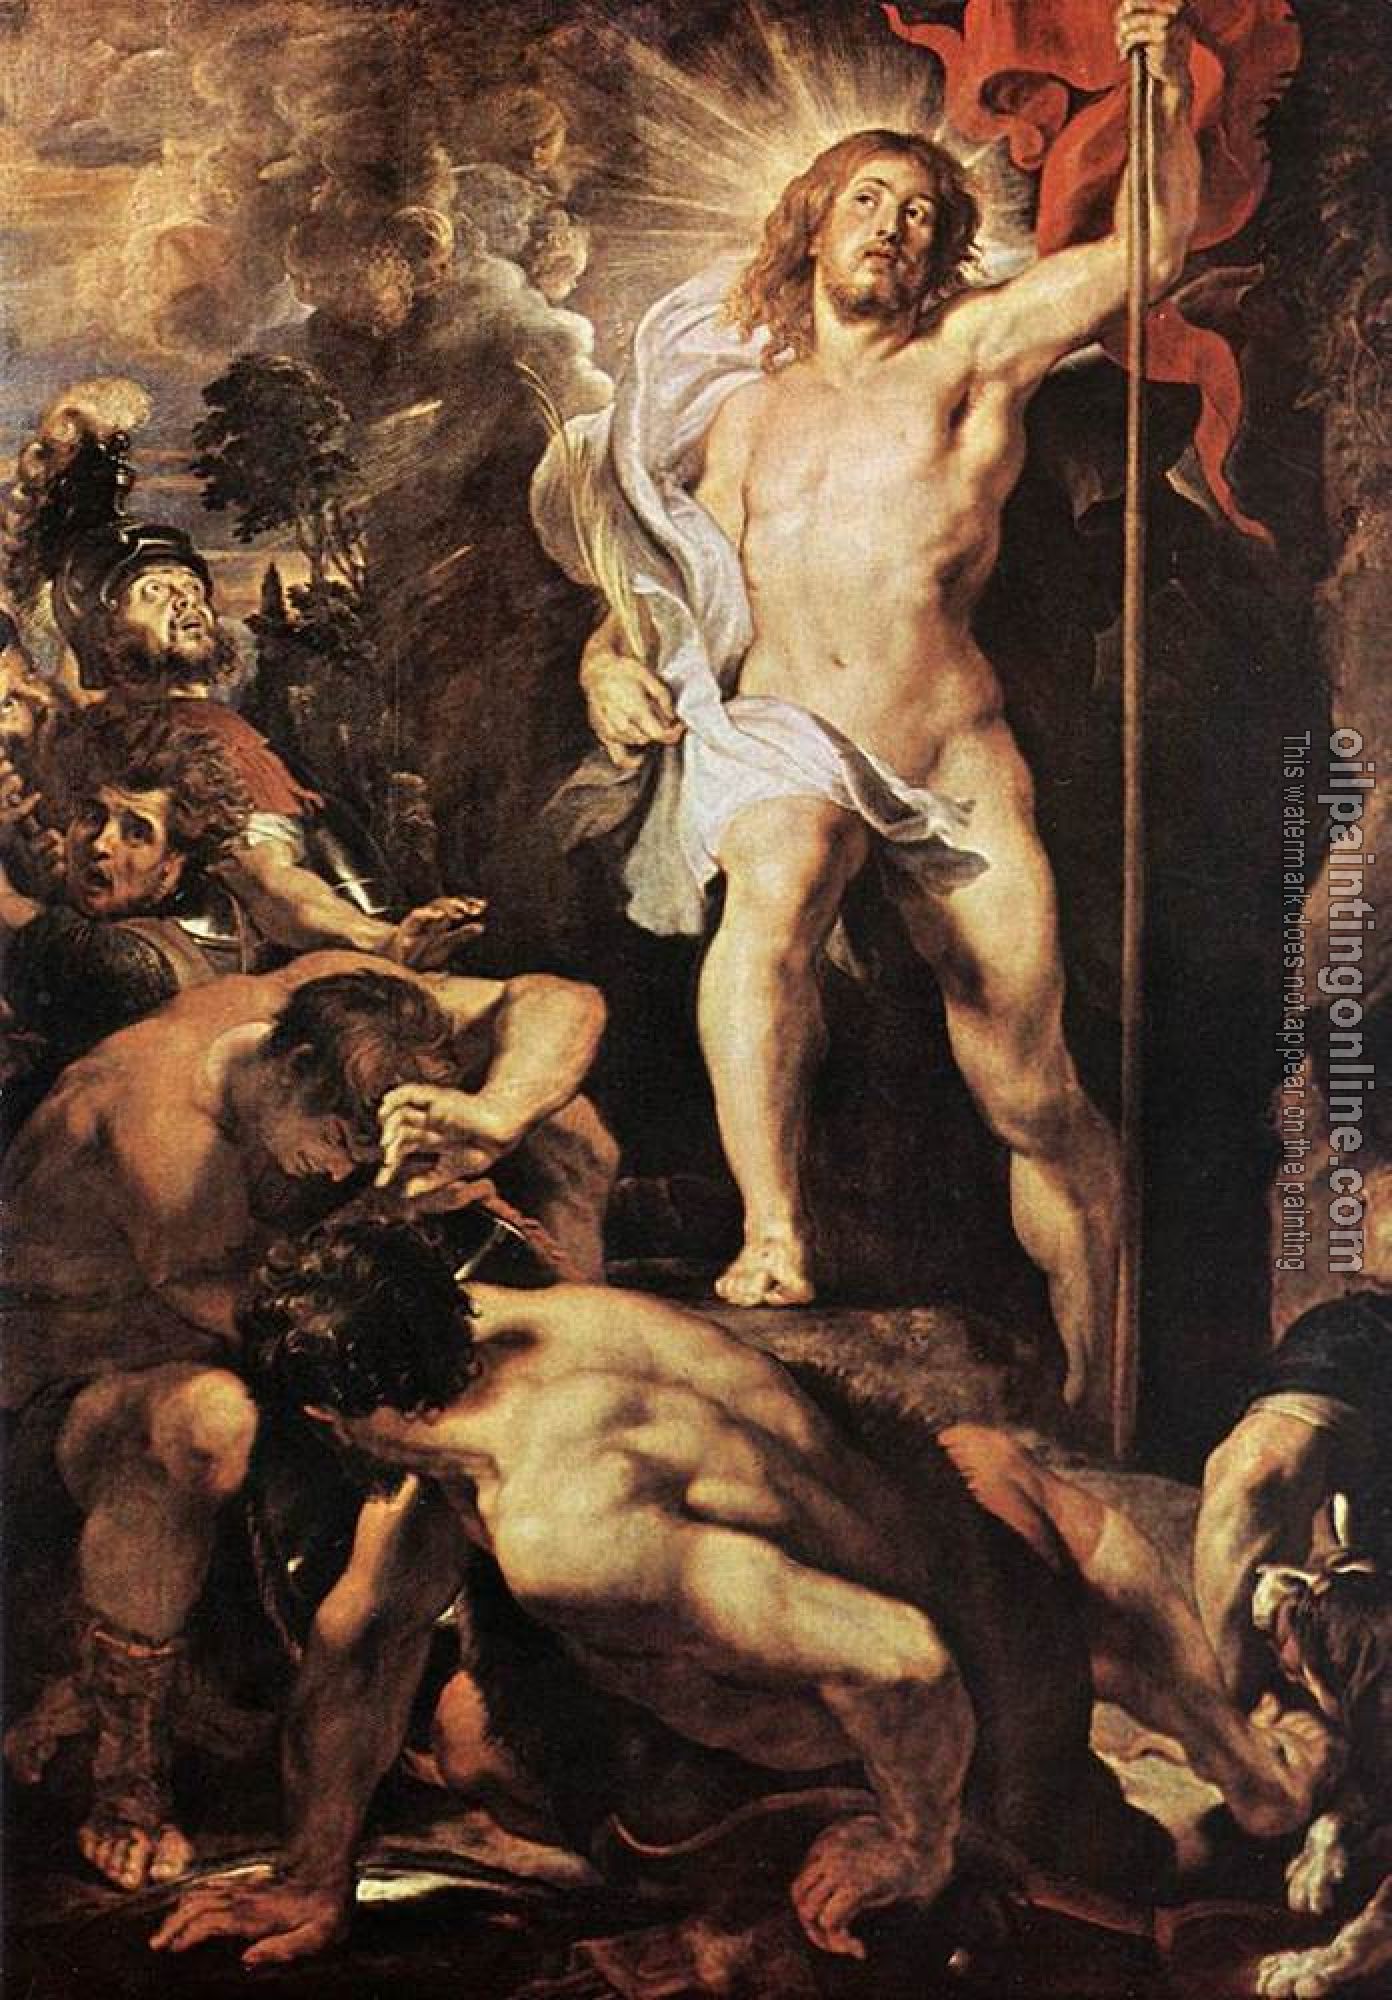 Rubens, Peter Paul - The Resurrection of Christ